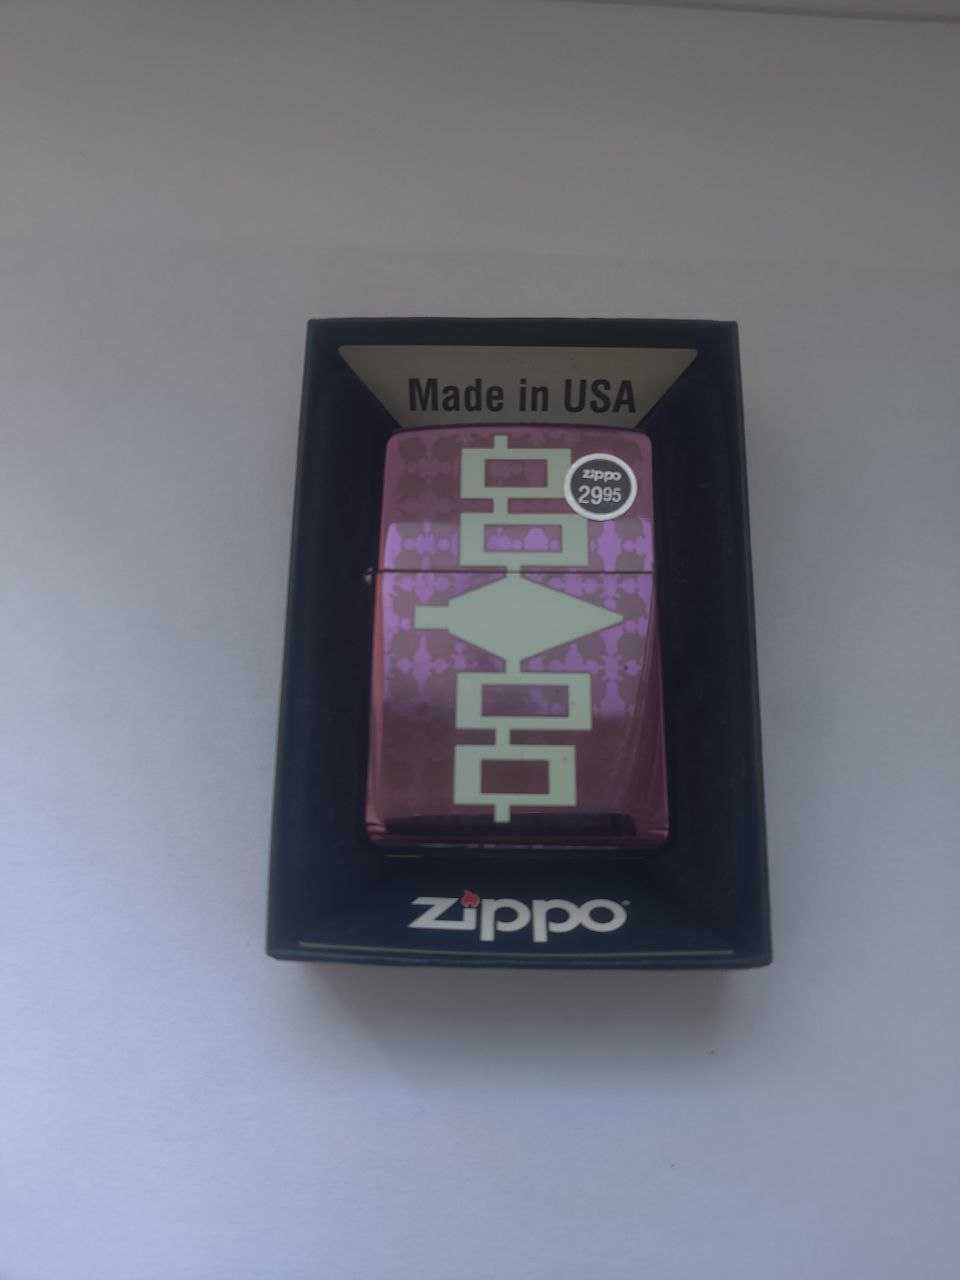 NEW! Zippo зажигалка новая Оригинал из США на Подарок